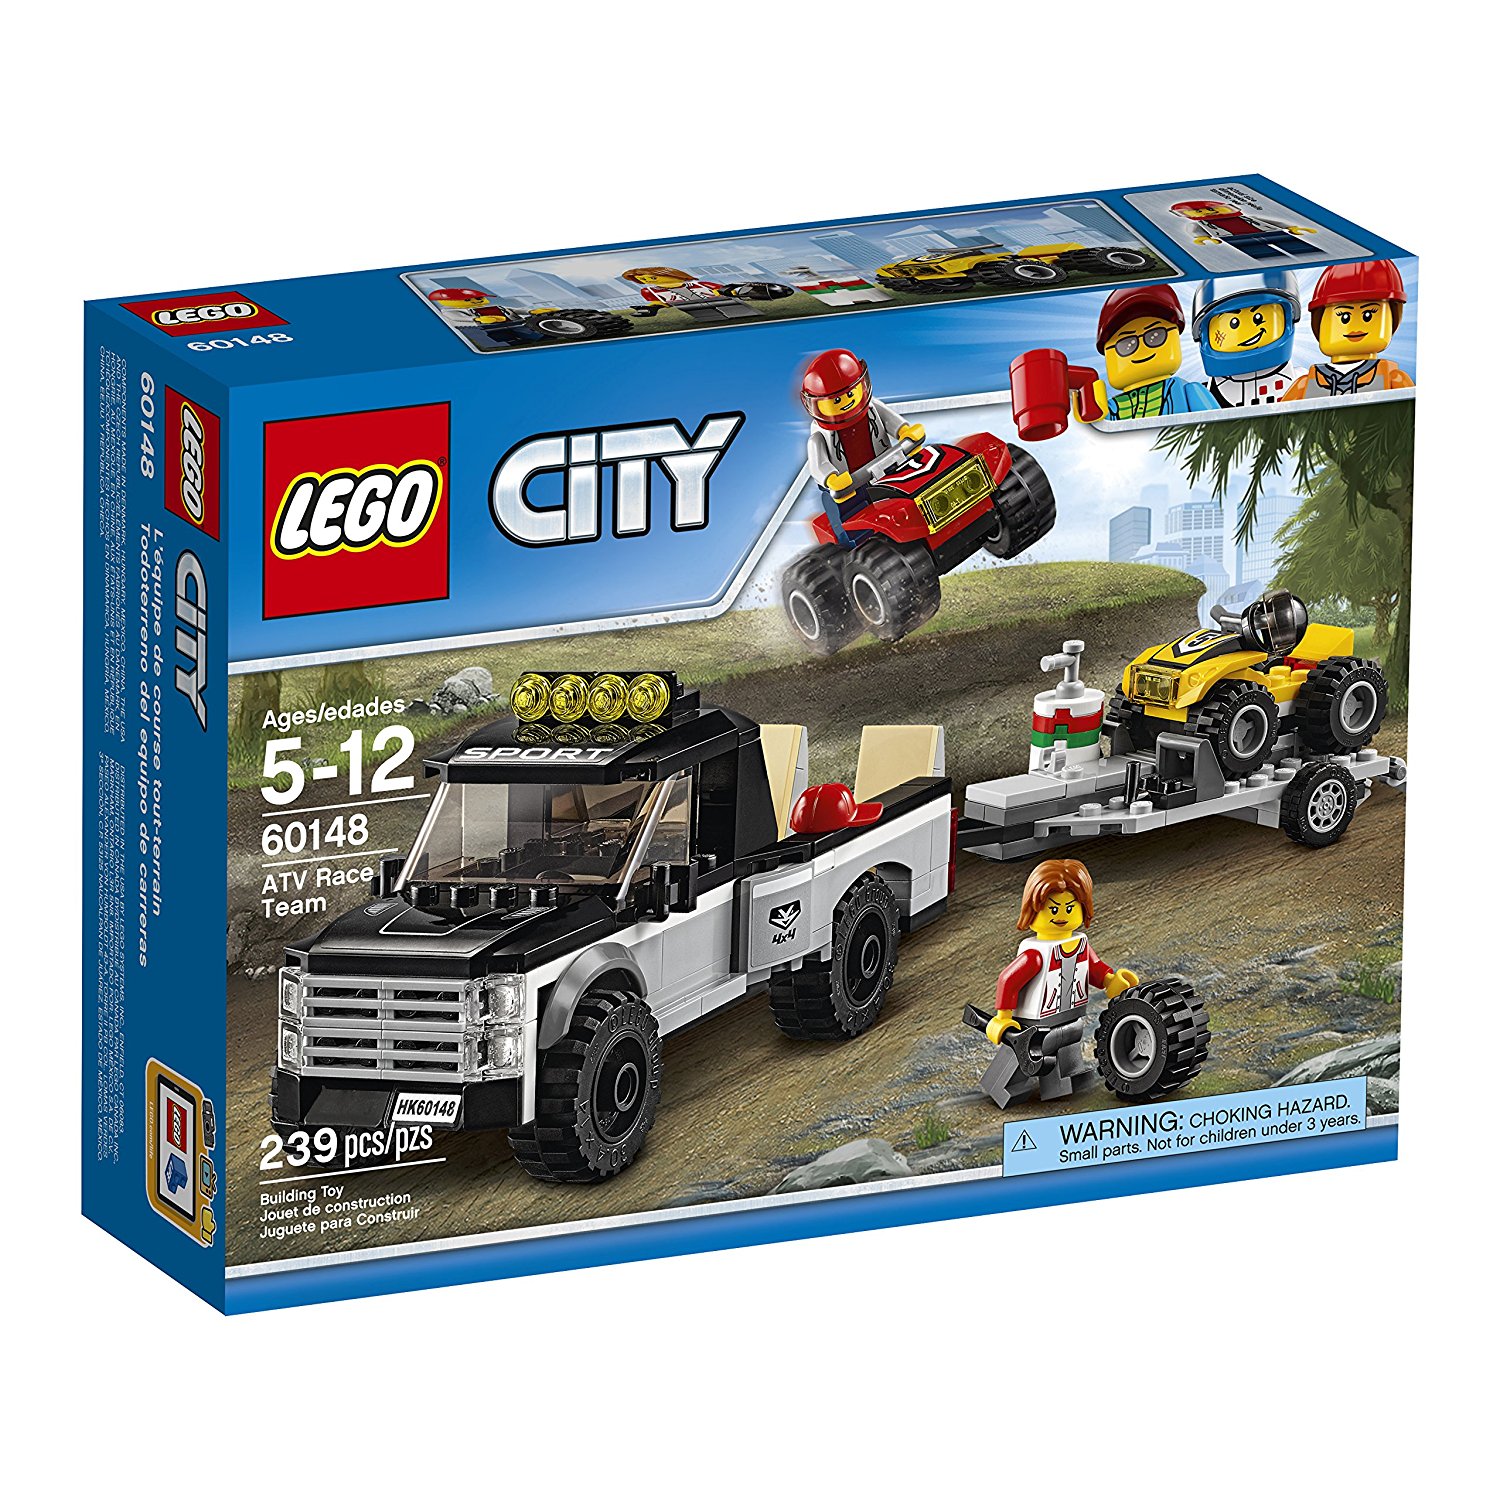 LEGO City ATV Race Team 60148 – Just $12.79!